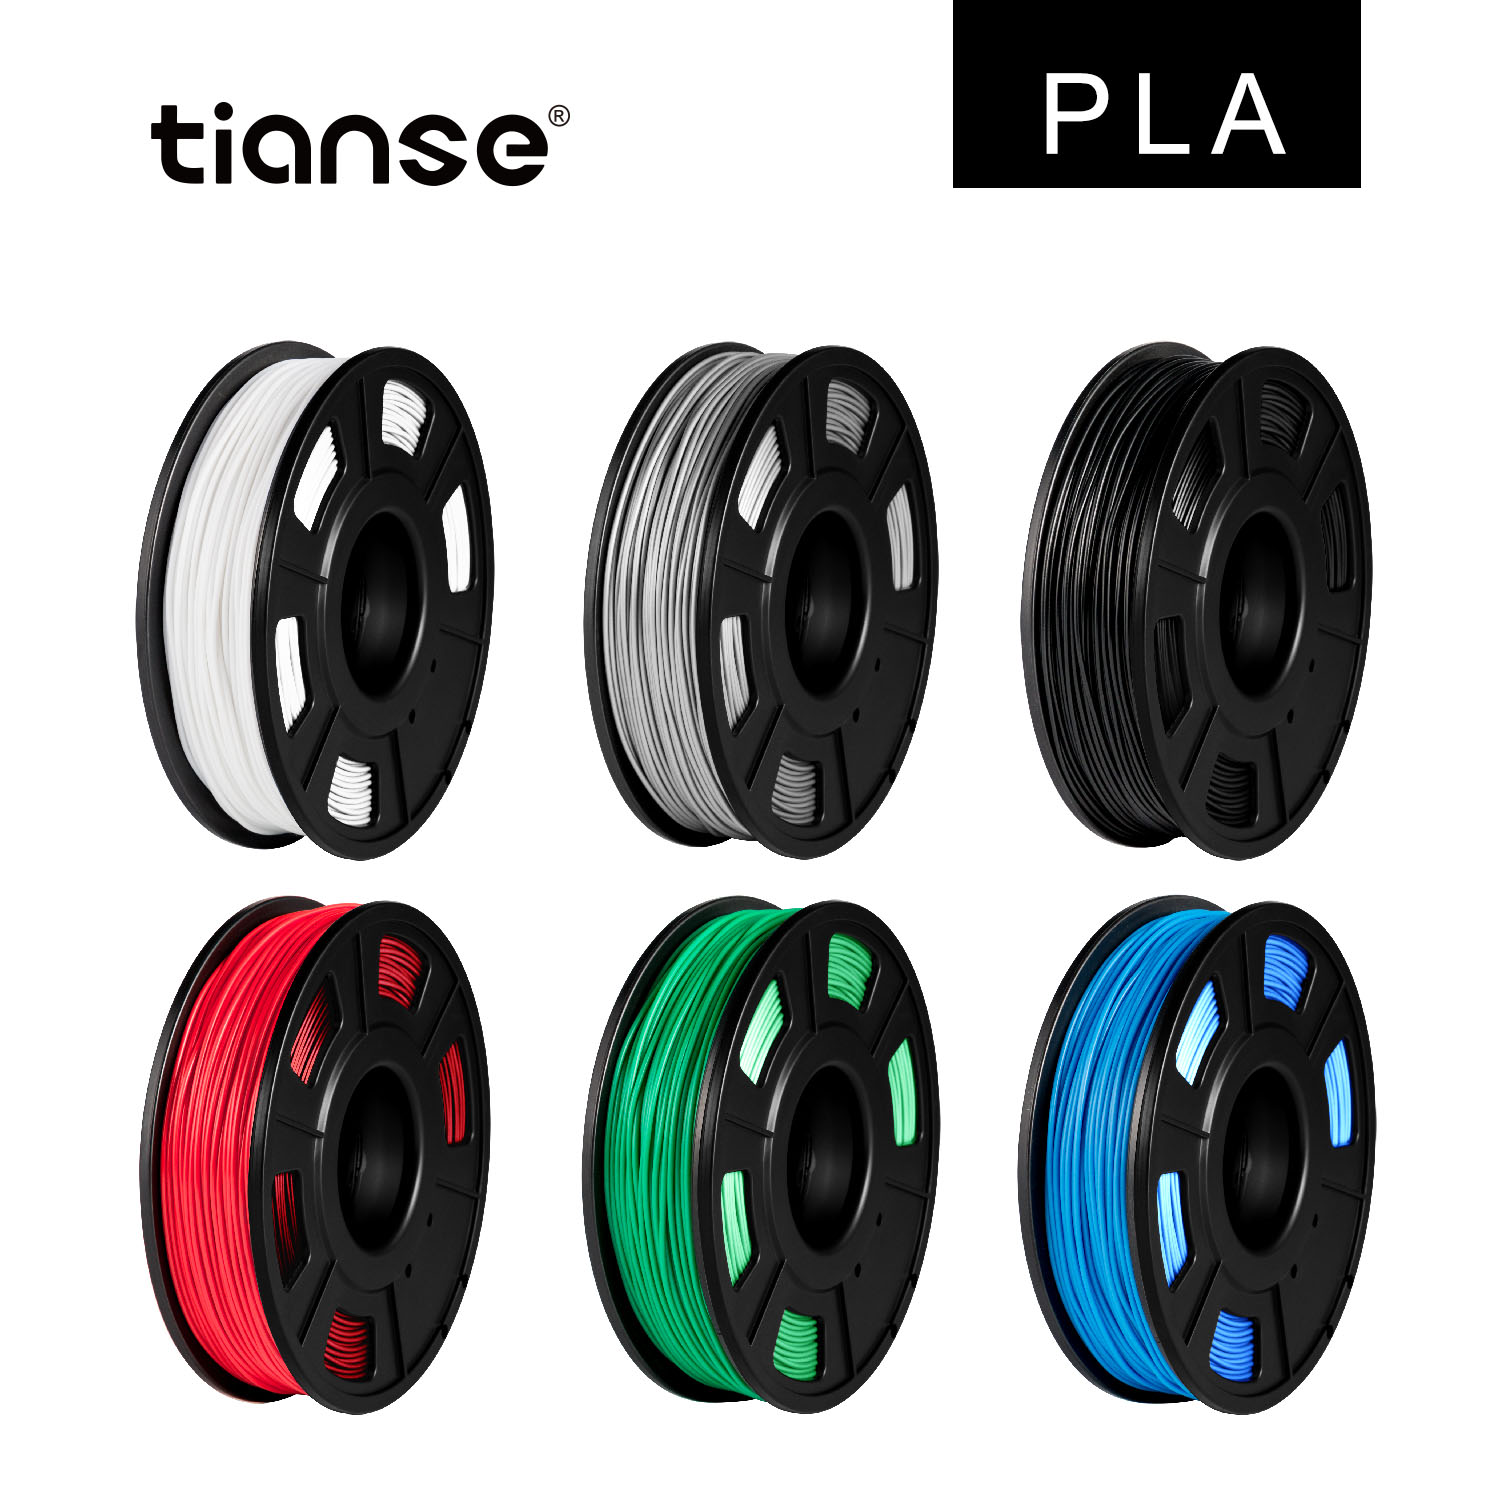 Tianse™ PLA Filament Profiles